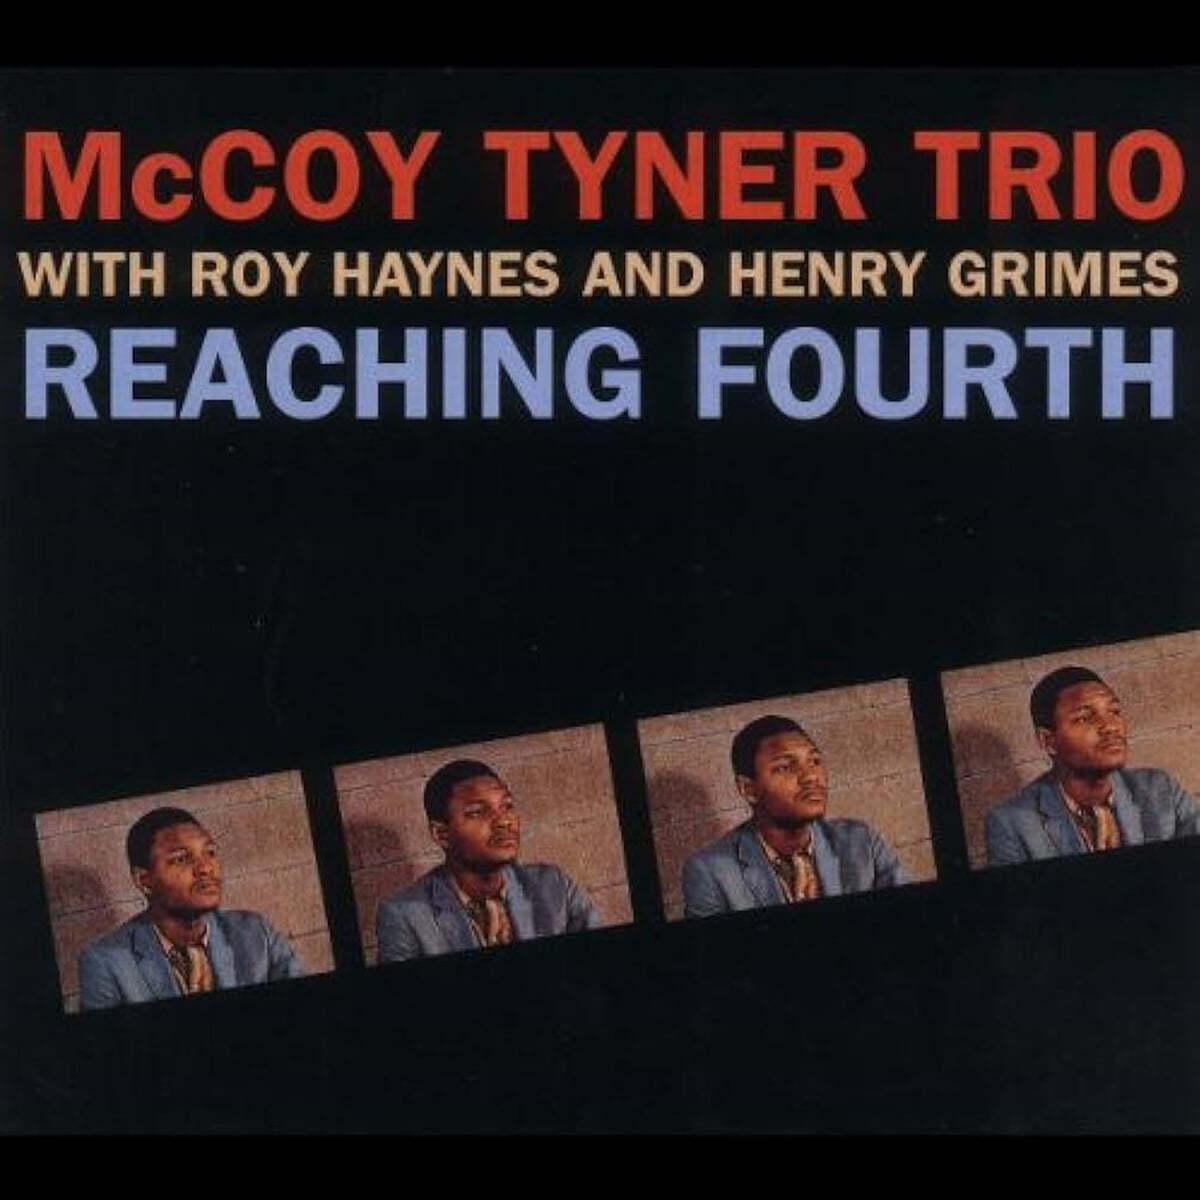 Mccoy Tyner - Reaching Fourth